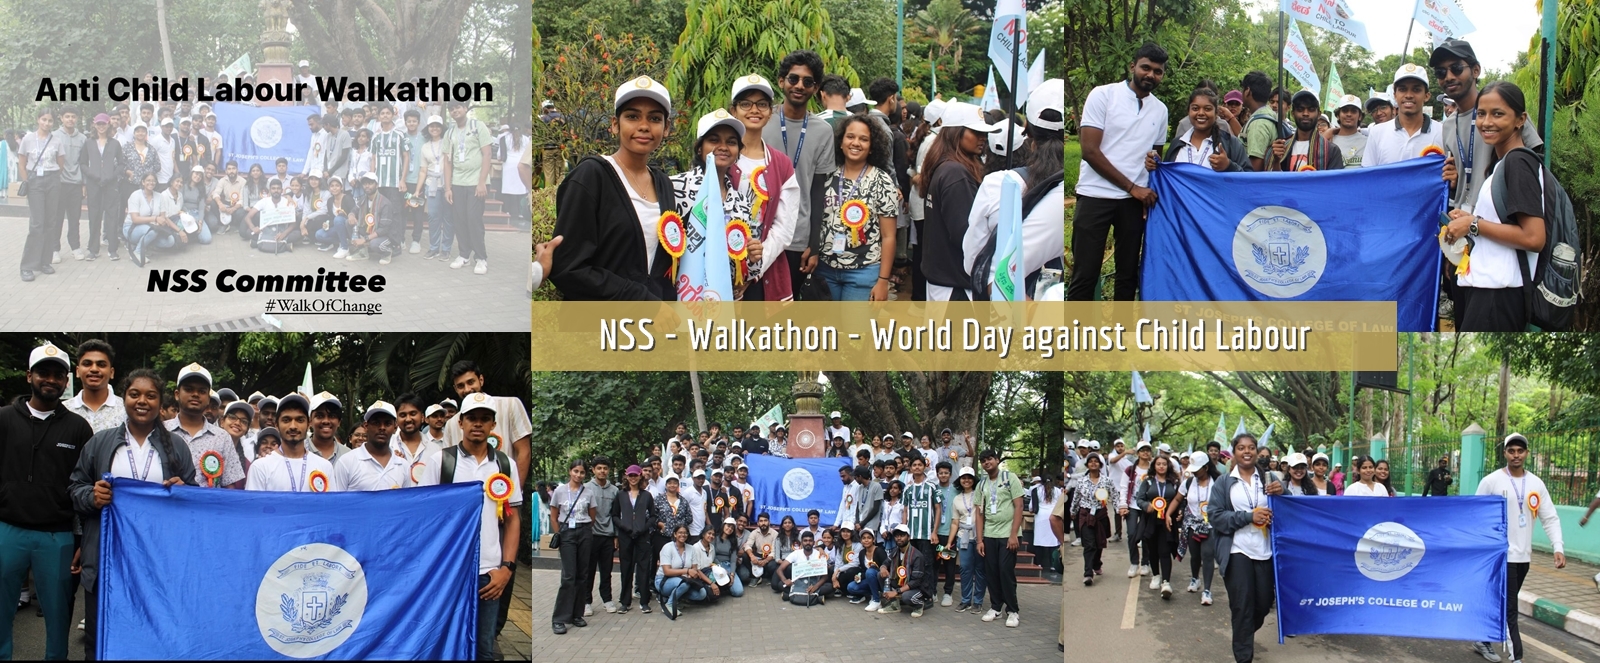 NSS - Walkathon - World Day against Child Labour